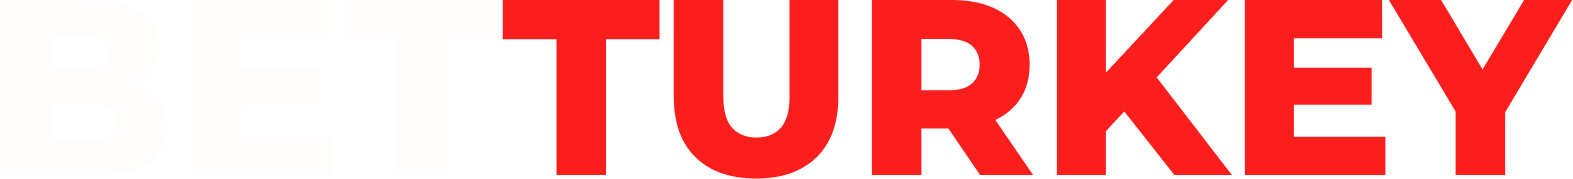 BetTurkey Logo